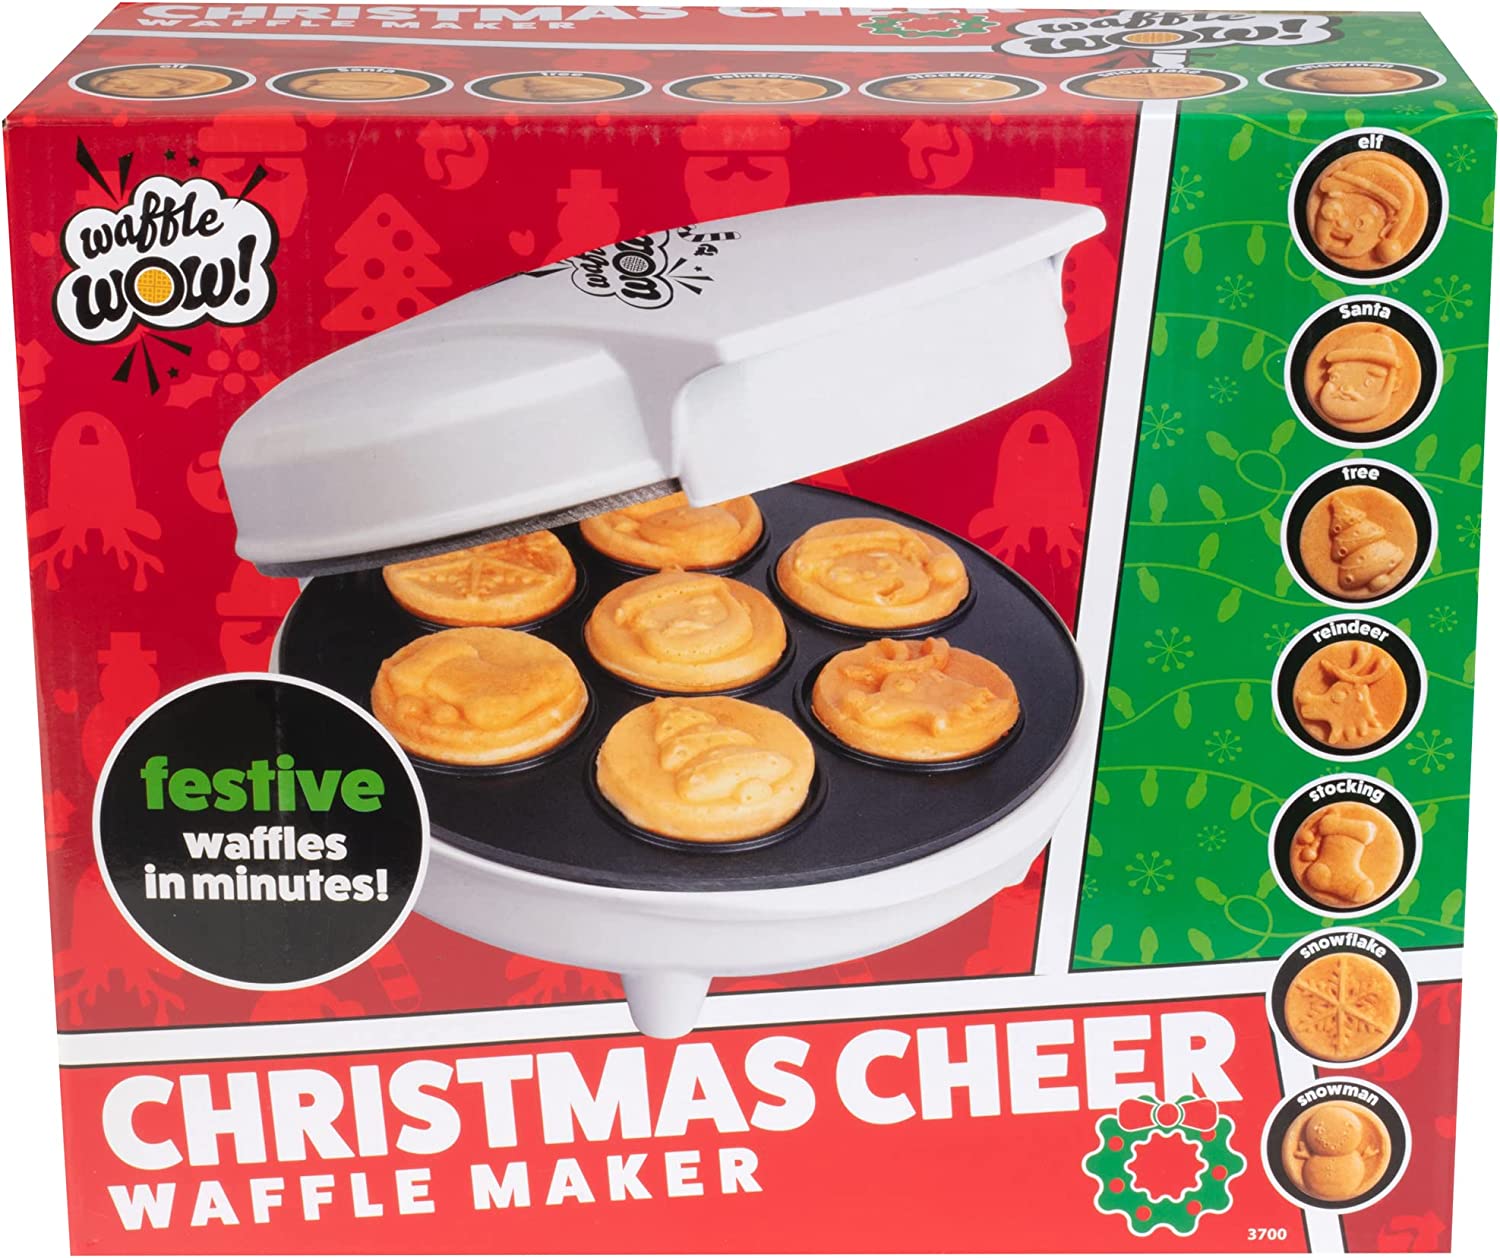 Christmas Cheer Waffle Maker